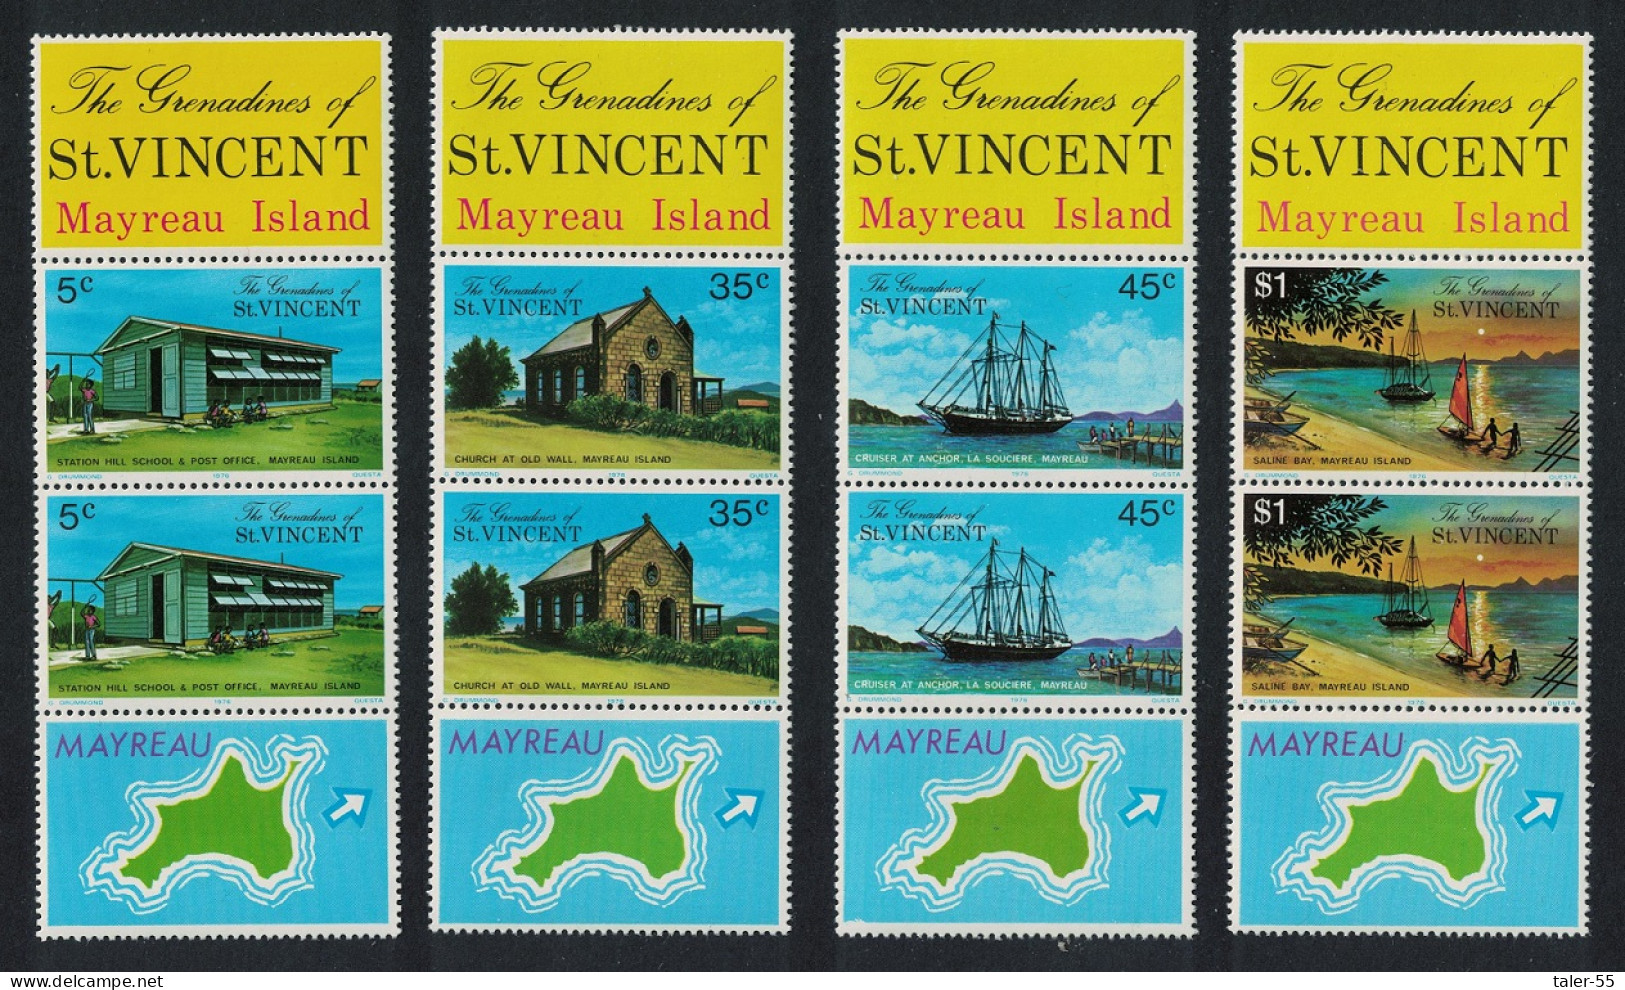 St. Vincent Gren Mayreau Island Church Pairs Both Labels 1976 MNH SG#89-92 - St.Vincent & Grenadines